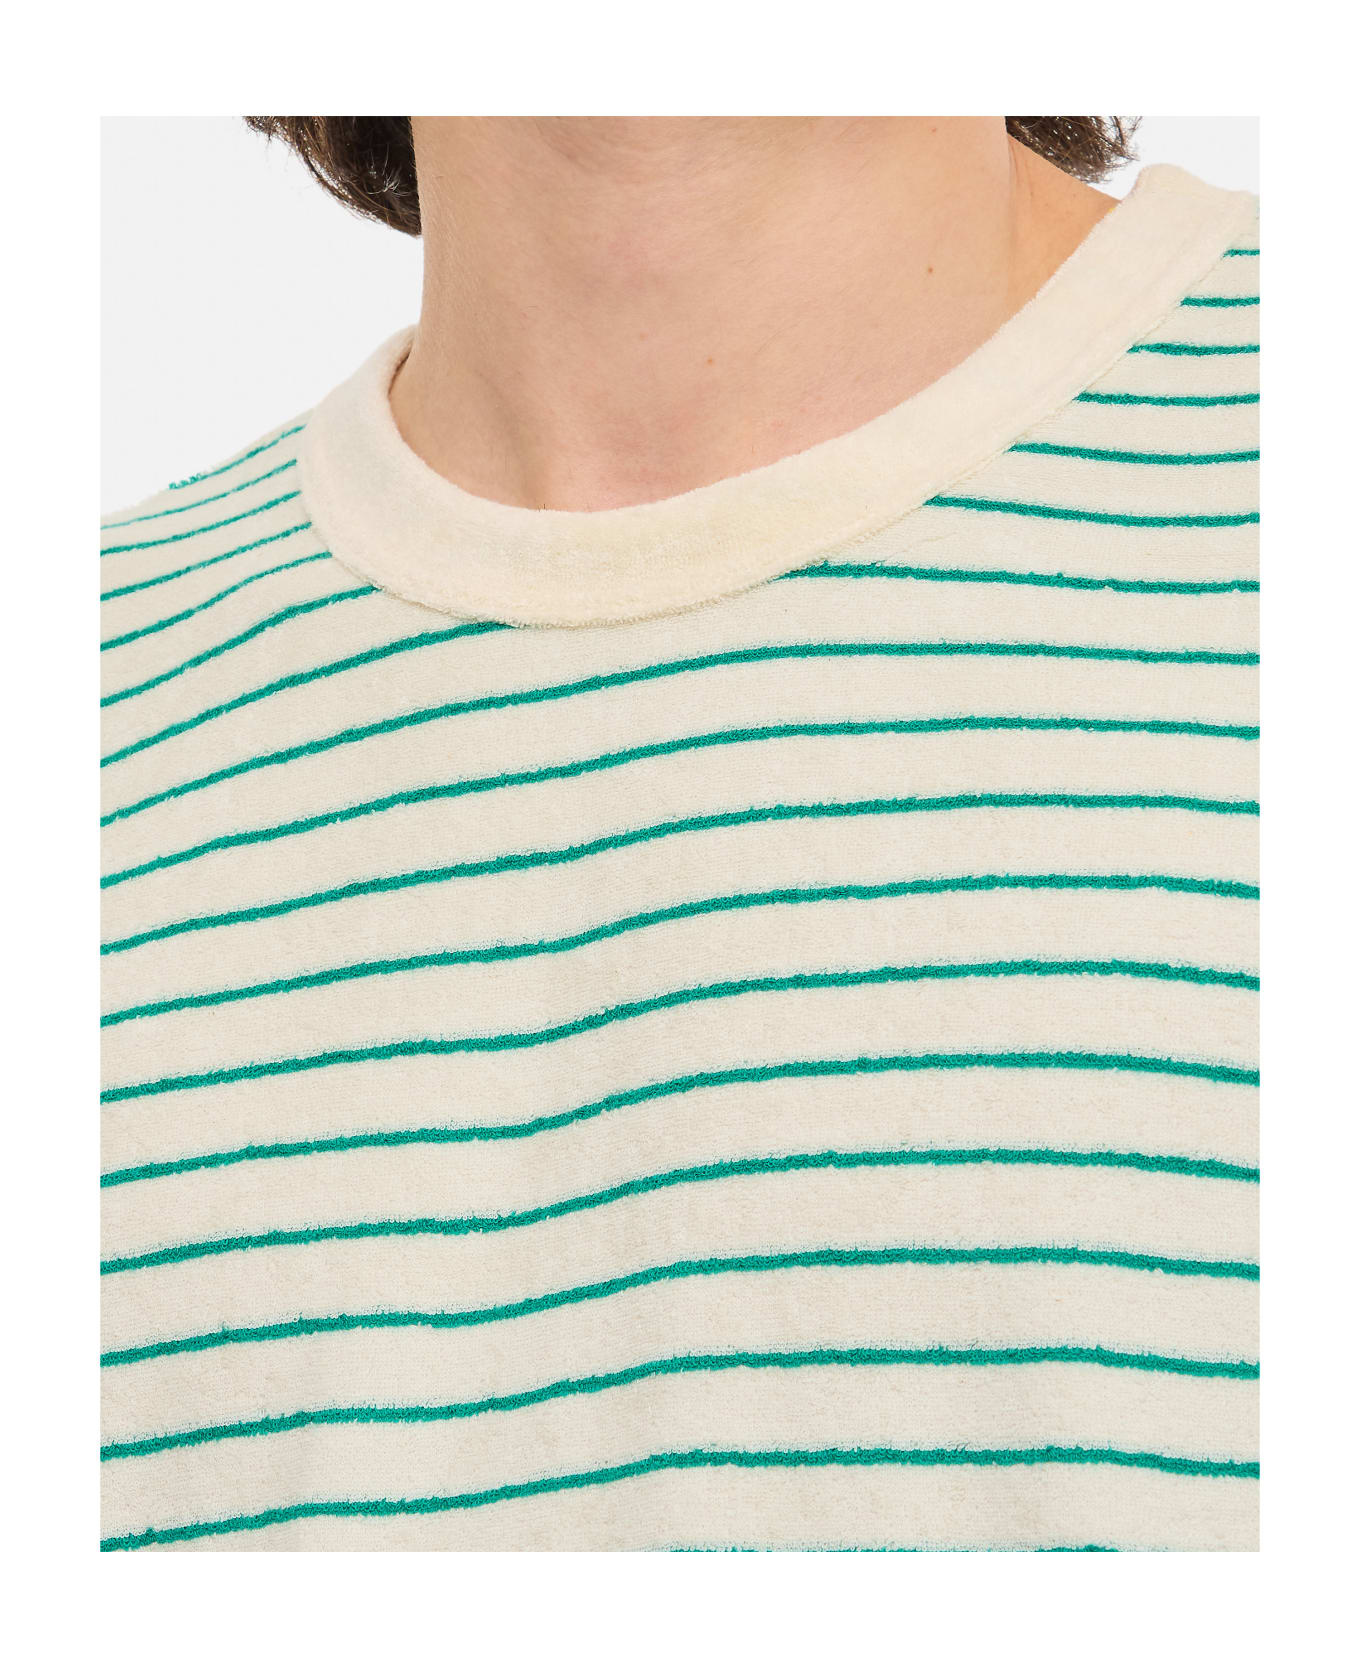 Howlin Stripes Cotton T-shirt - Green